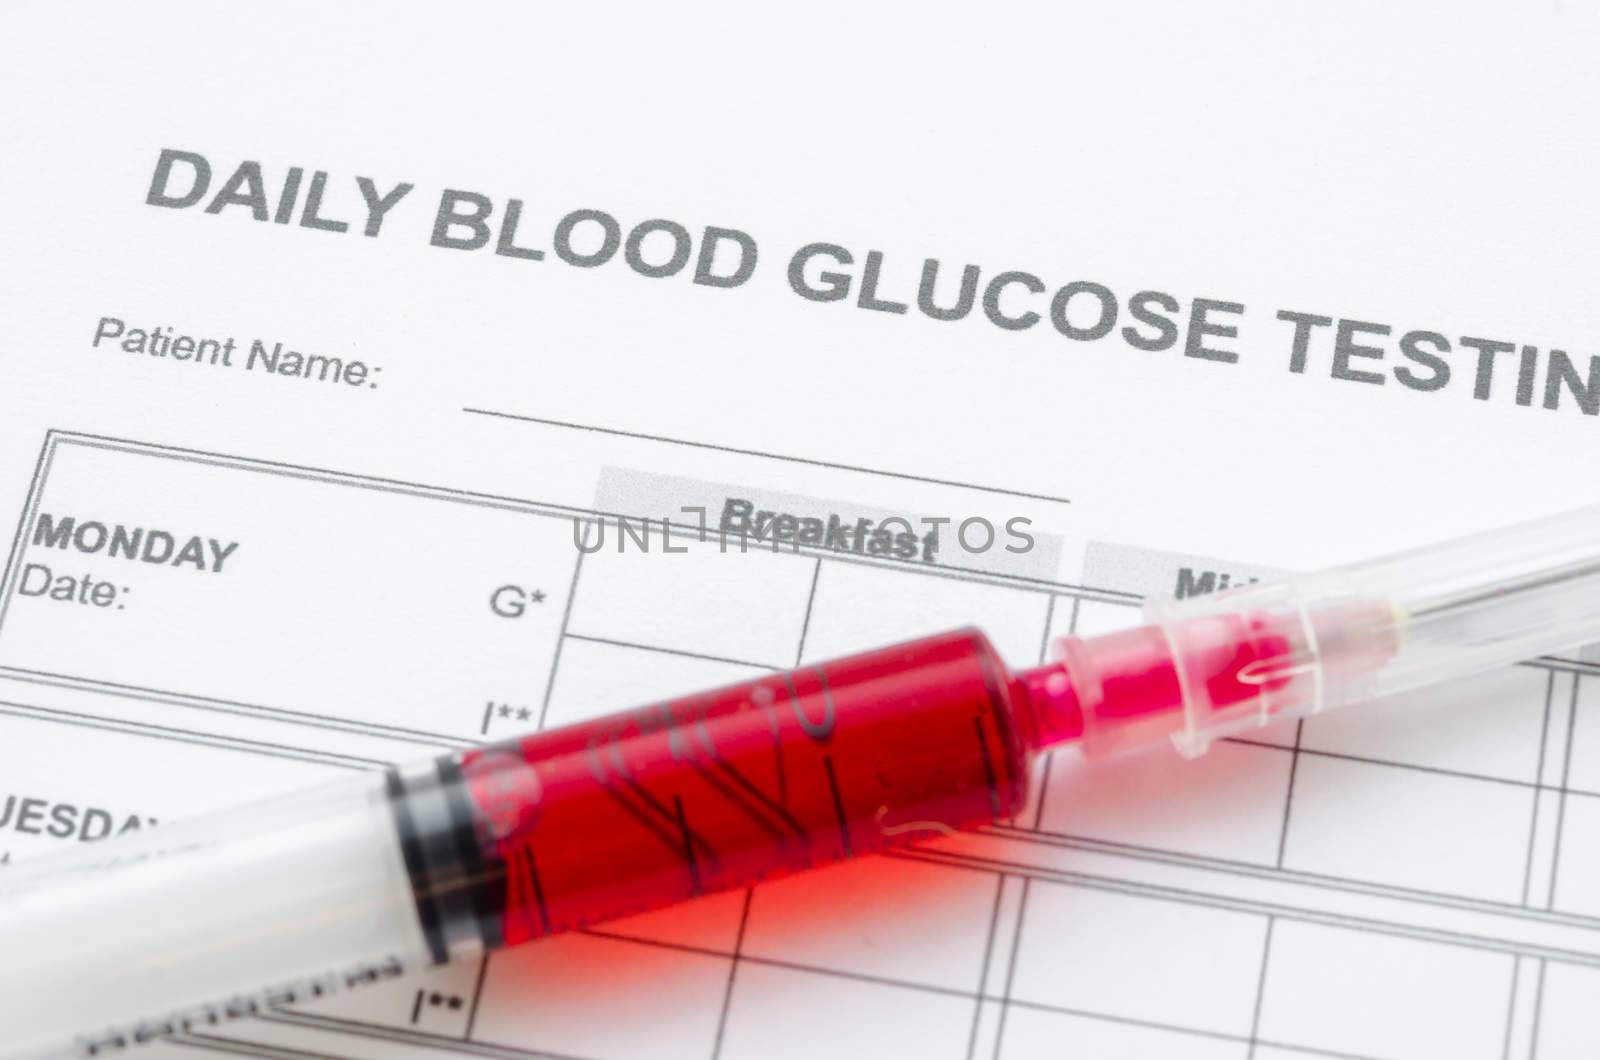 Focus daily blood glucose testing. by Gamjai